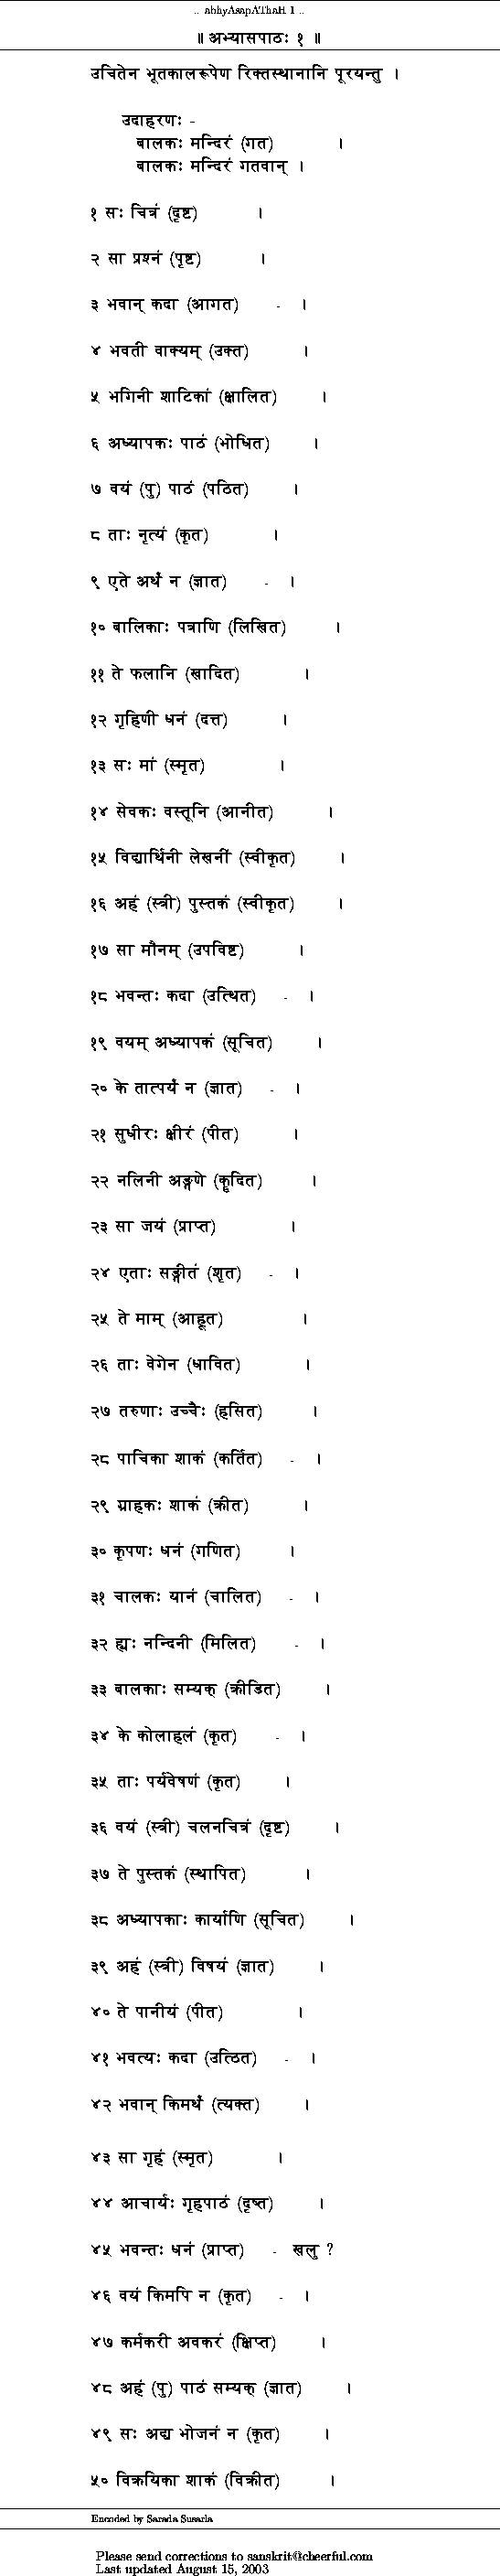 Sanskrit Documents List Learning Tools